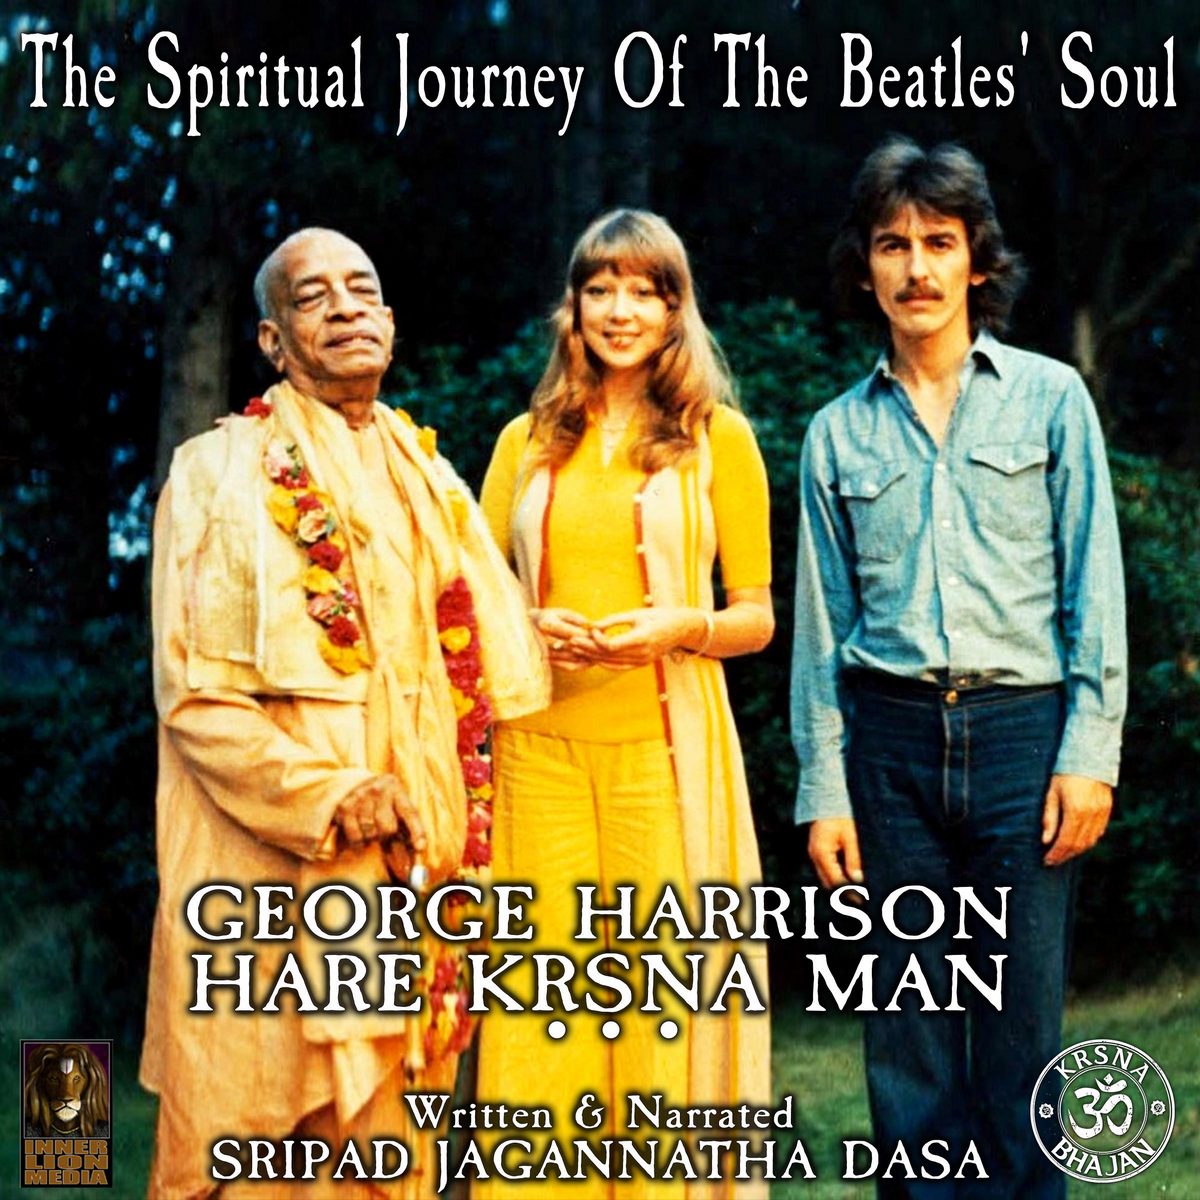 The Spiritual Journey Of The Beatles’ Soul George Harrison Hare Krsna Man